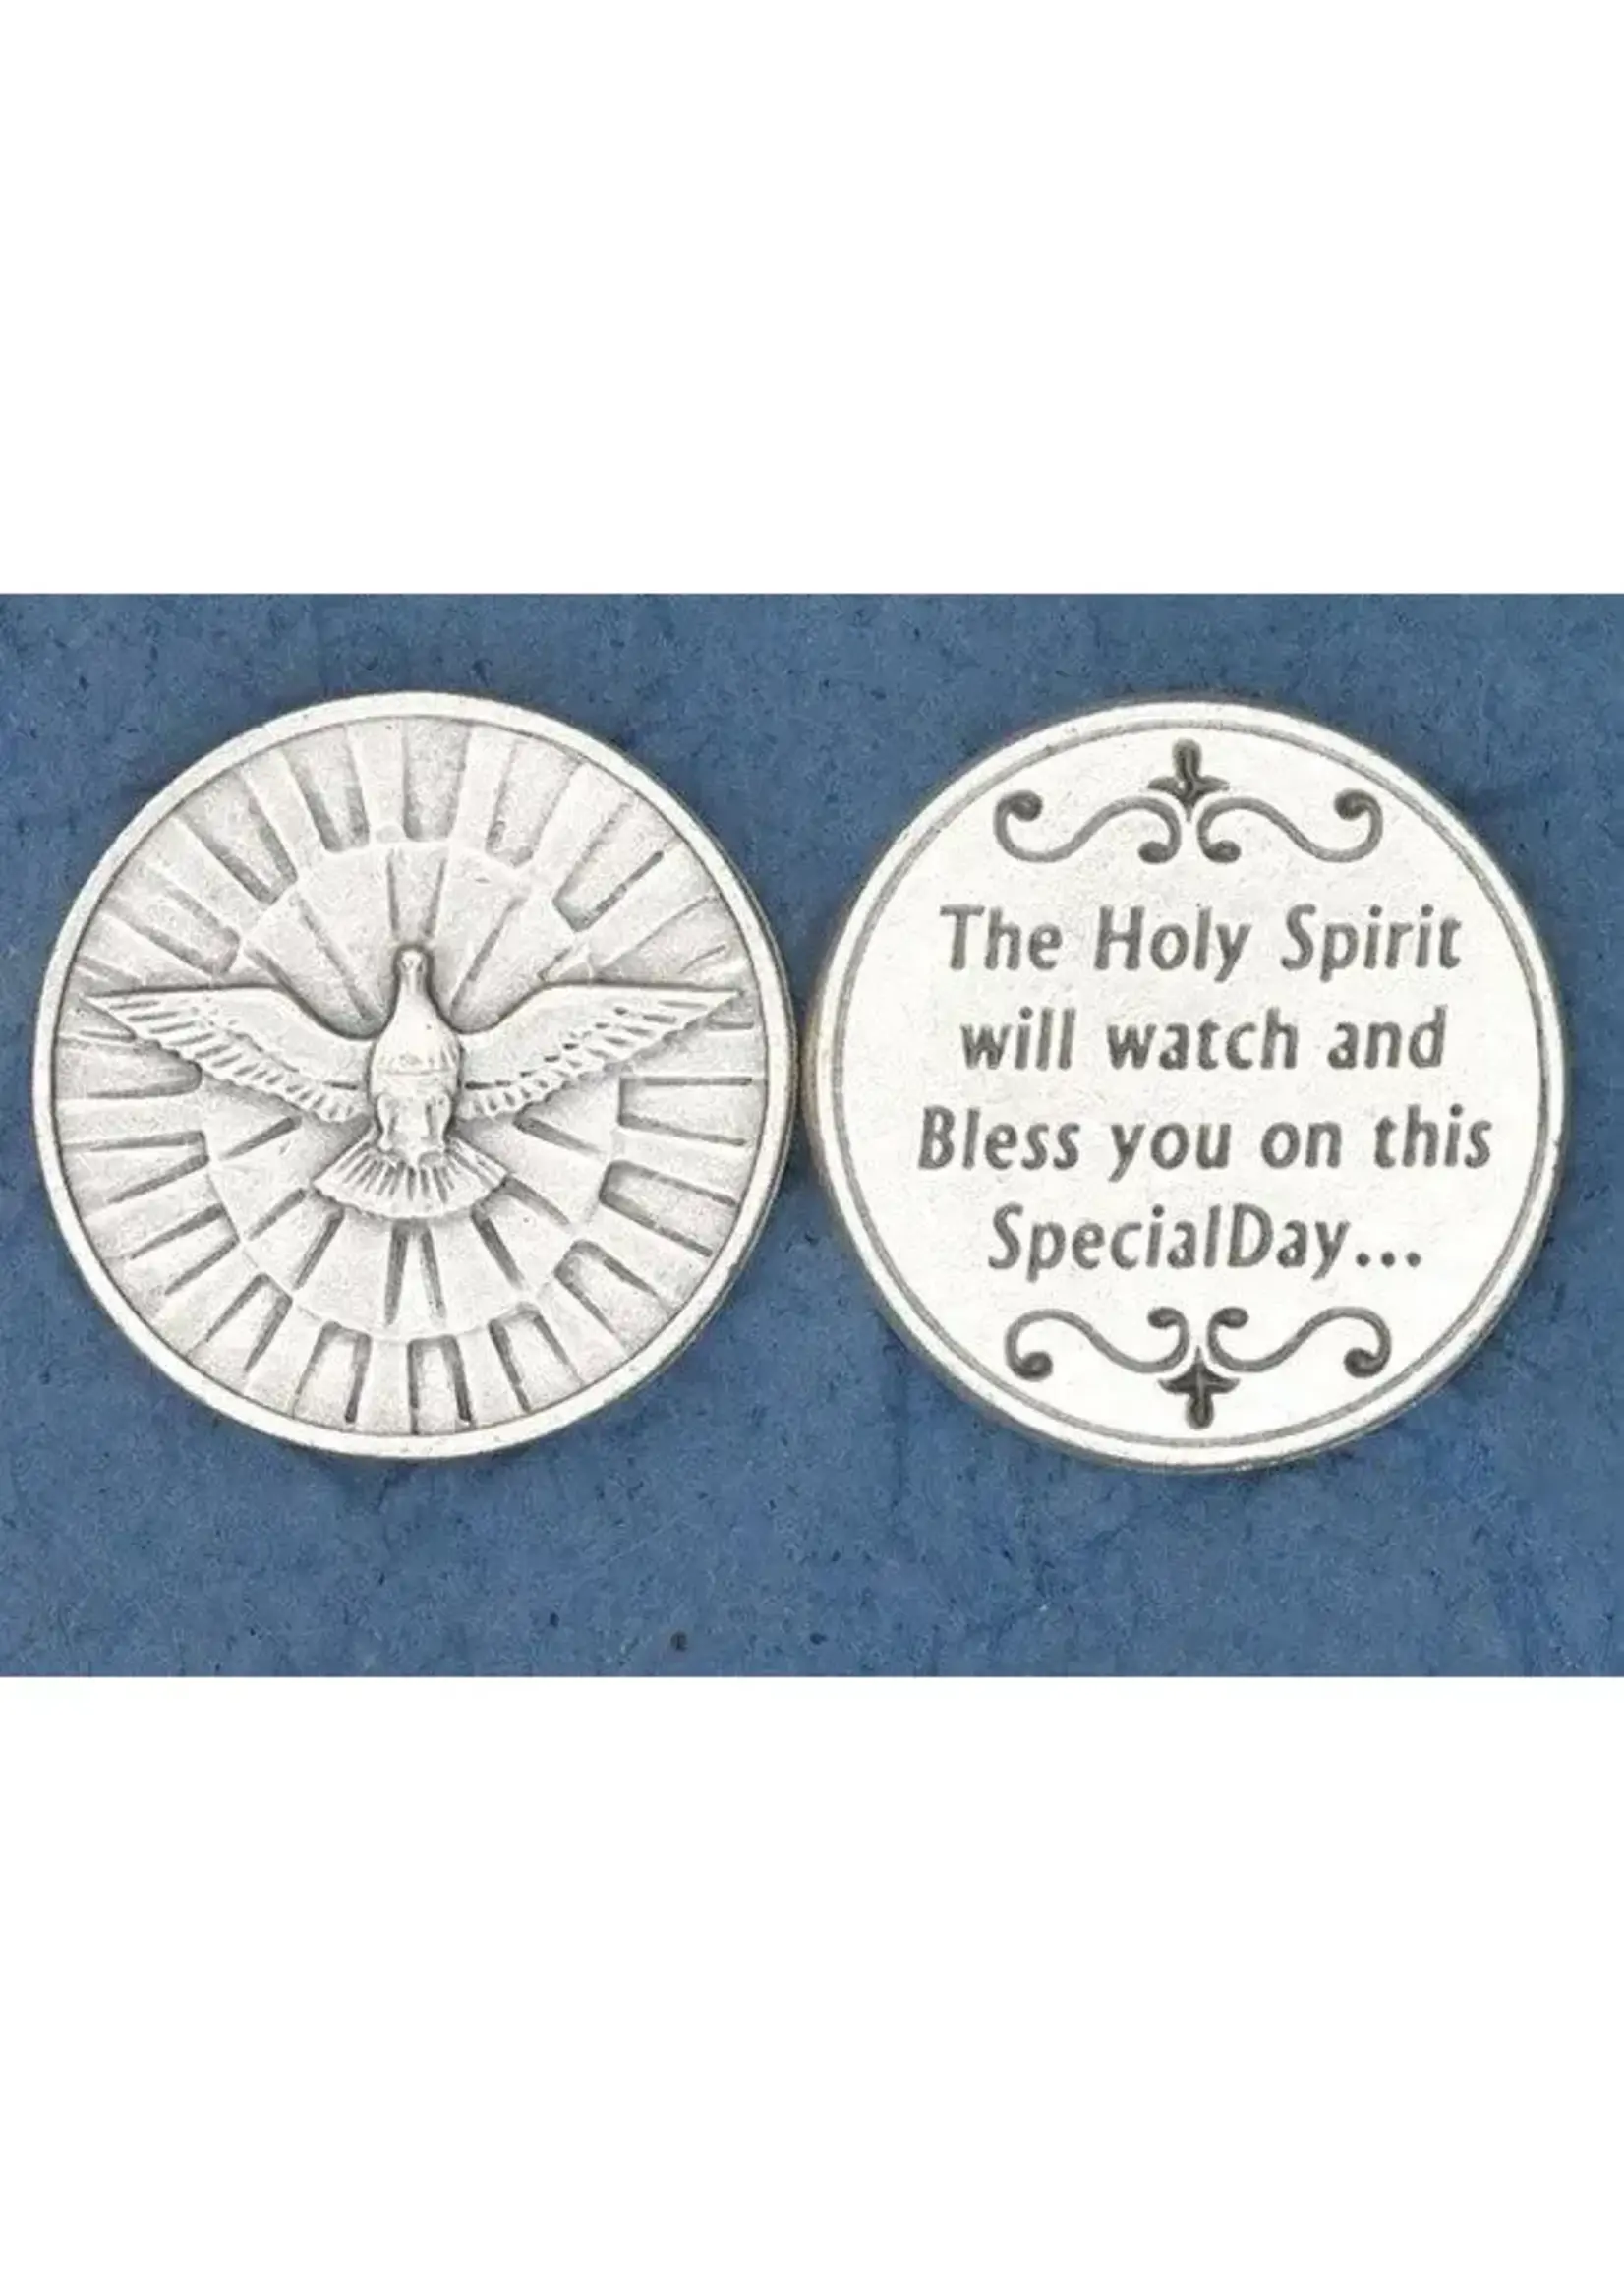 Holy Spirit Special Day Blessing prayer pocket coin/token